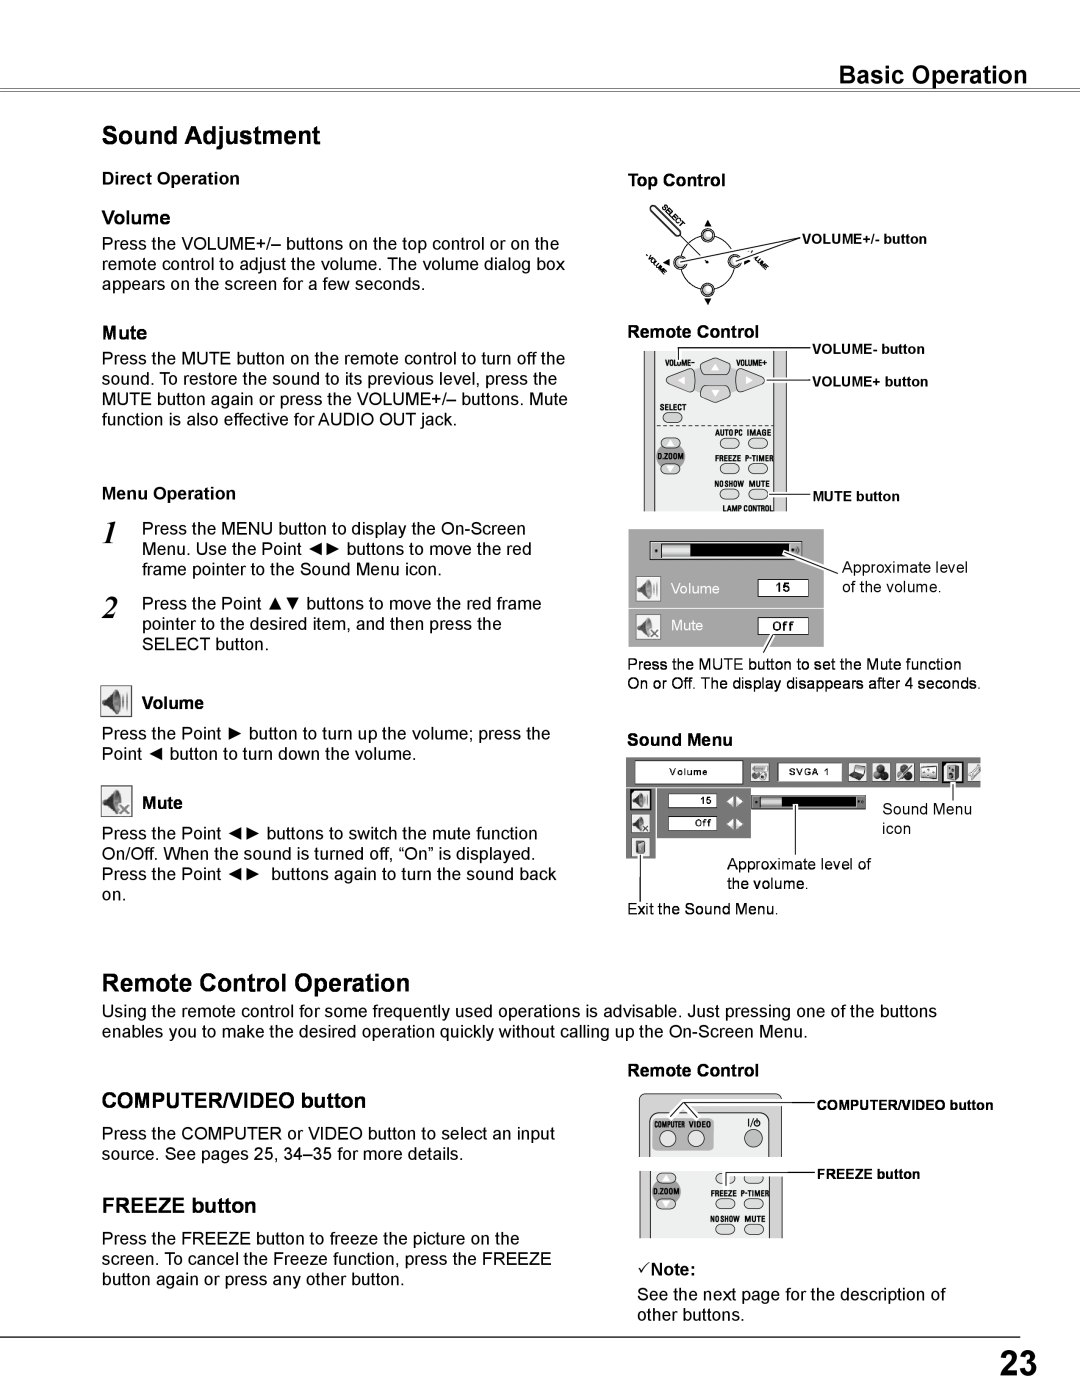 Sanyo PLC-WXL46 Sound Adjustment, Remote Control Operation, COMPUTER/VIDEO button, FREEZE button, Basic Operation, Volume 